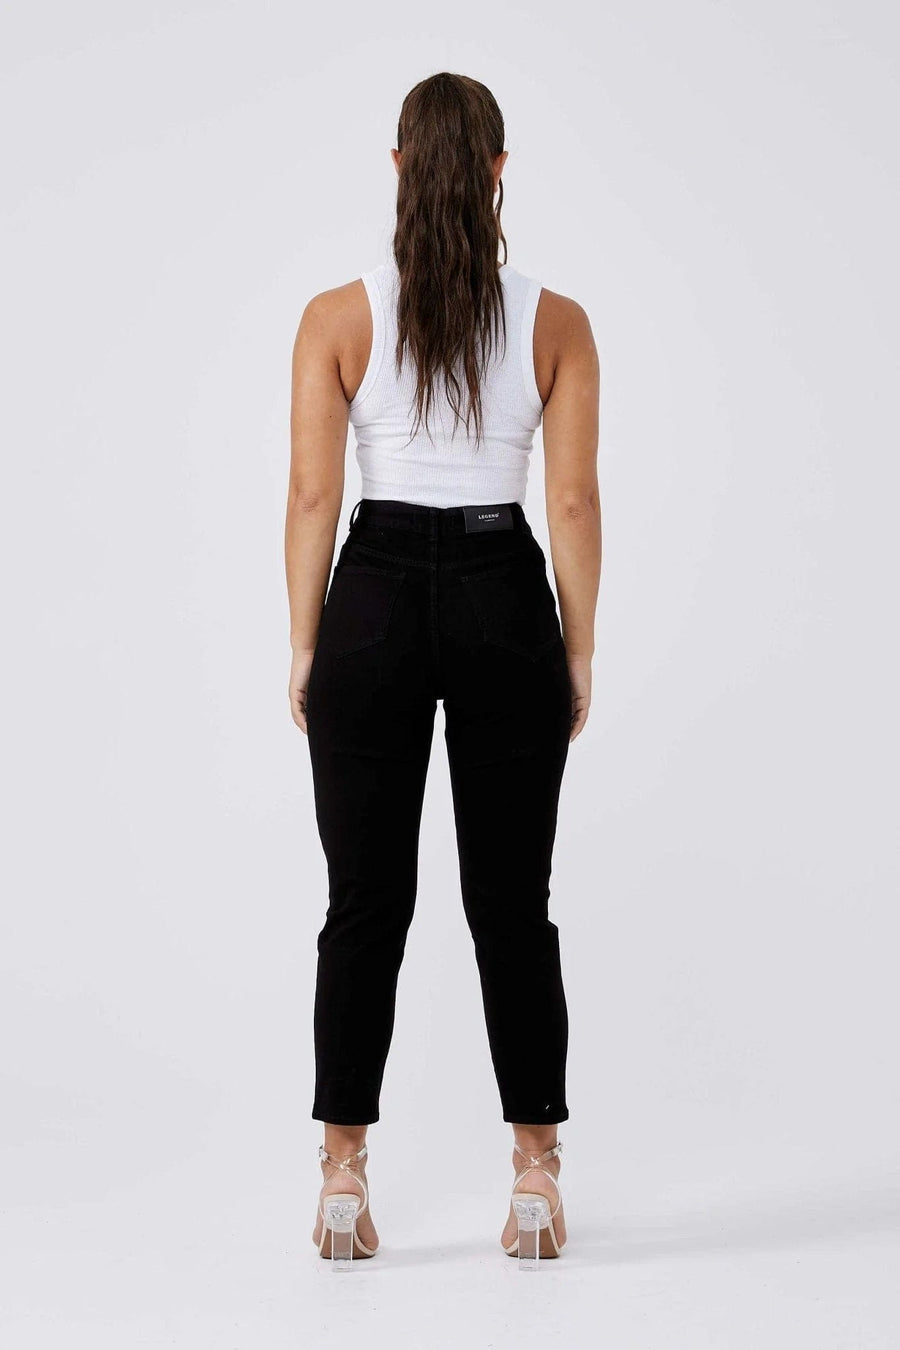 Legend London Womens Jeans MOM JEANS - BLACK